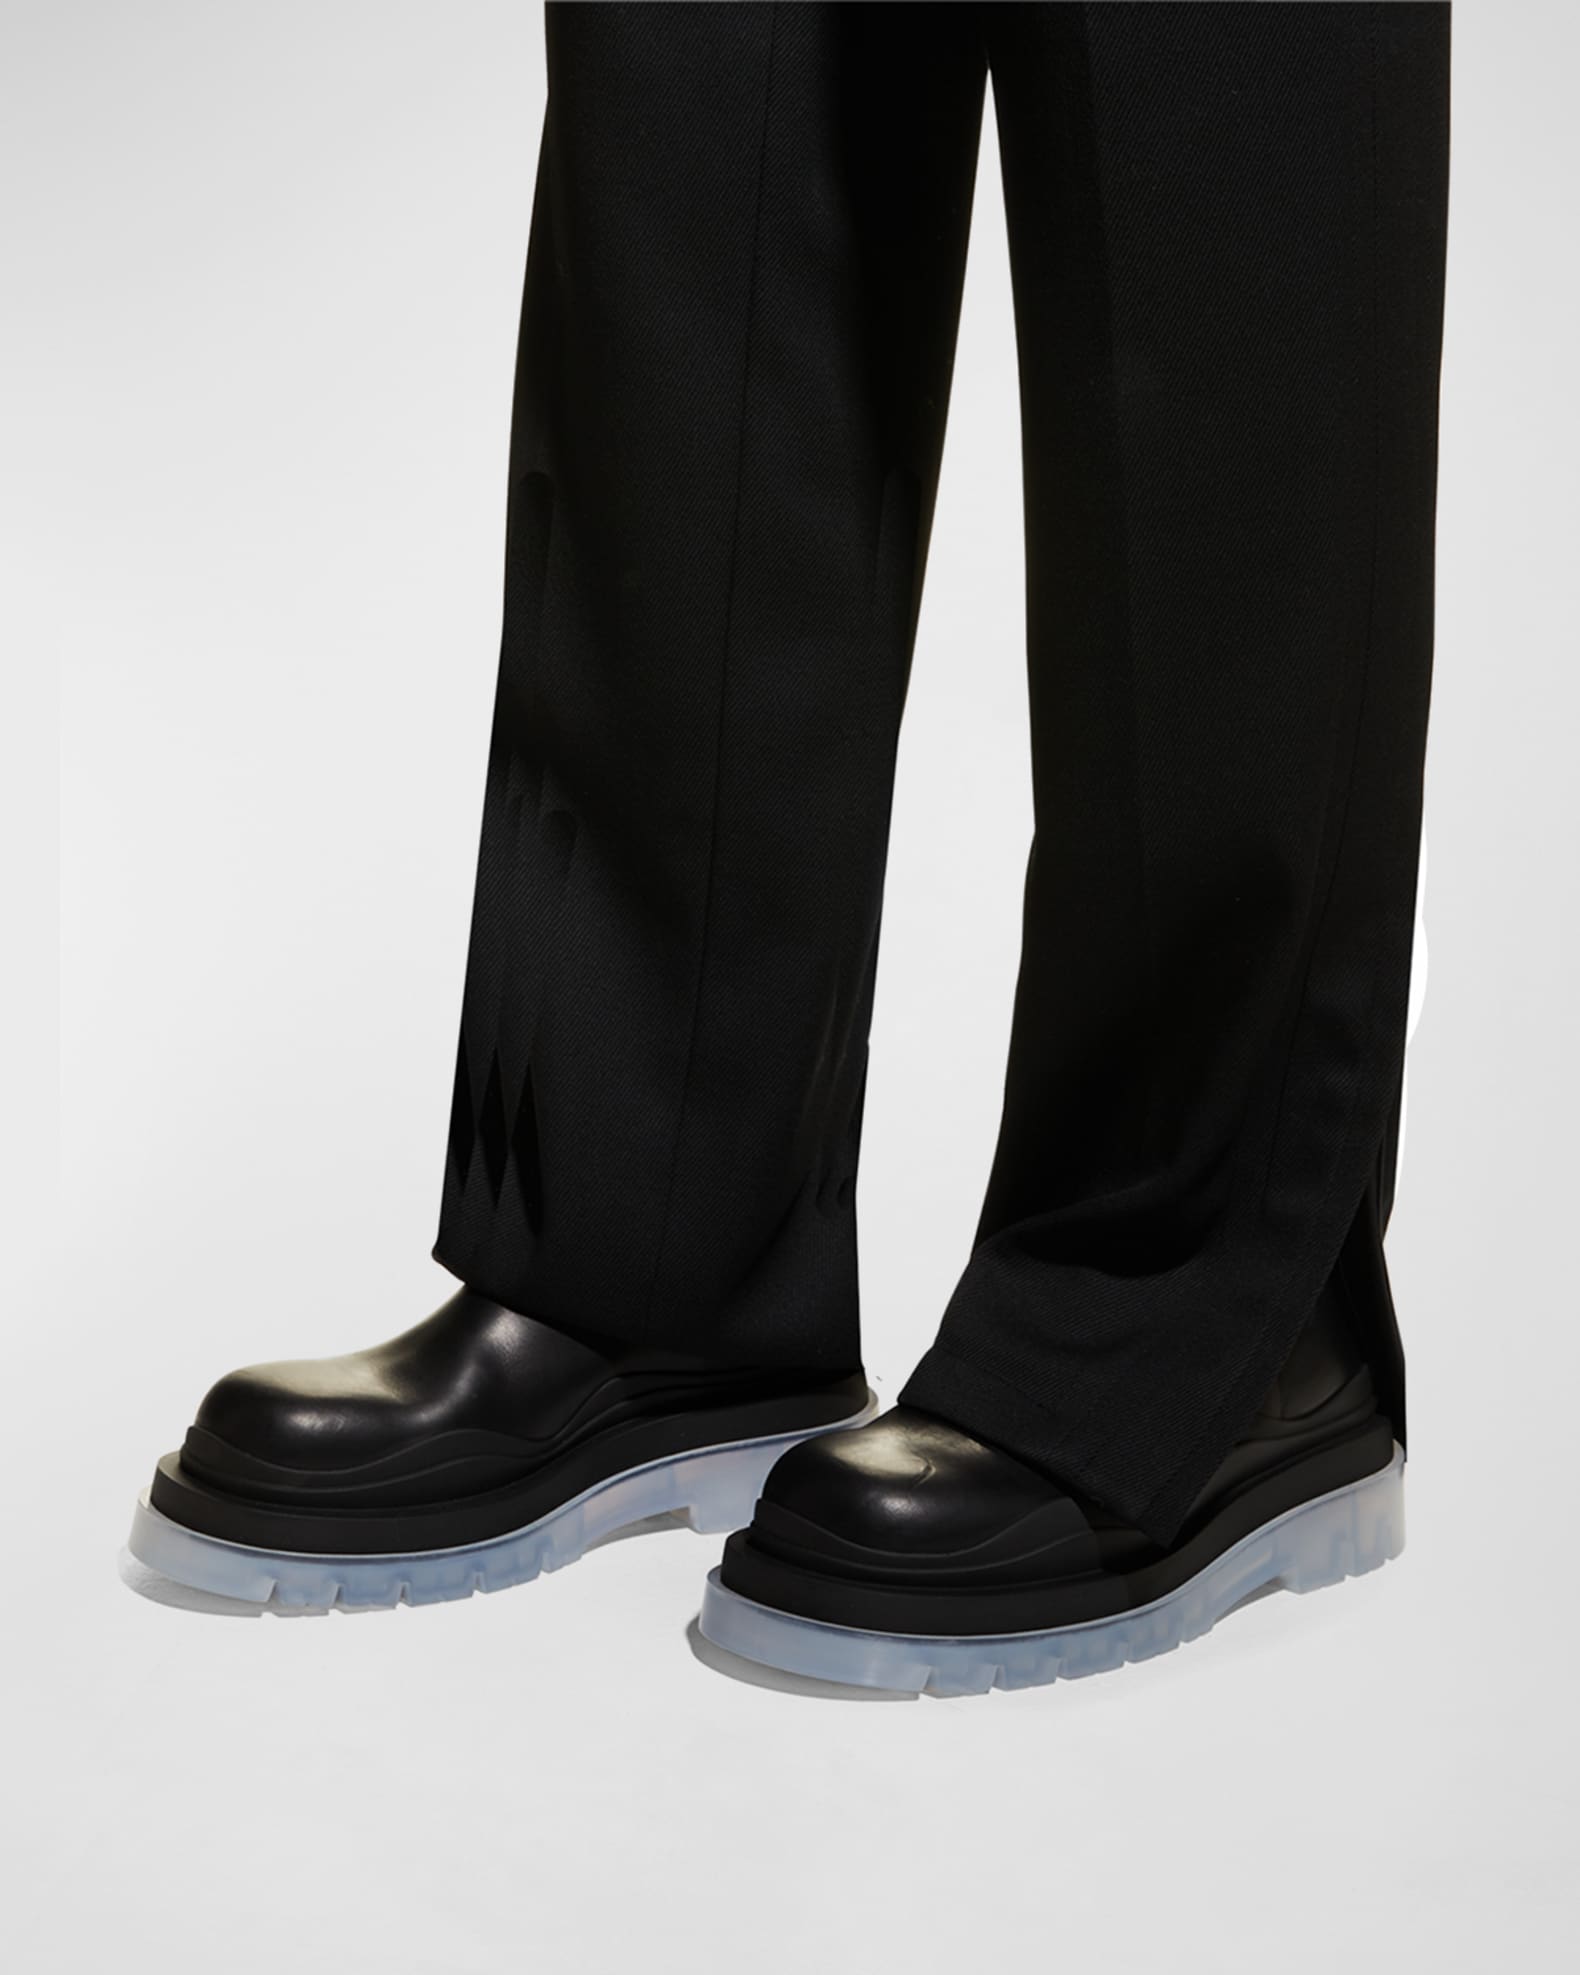 Bottega Veneta Men's The Tire Leather Chunky Chelsea Boots | Neiman Marcus